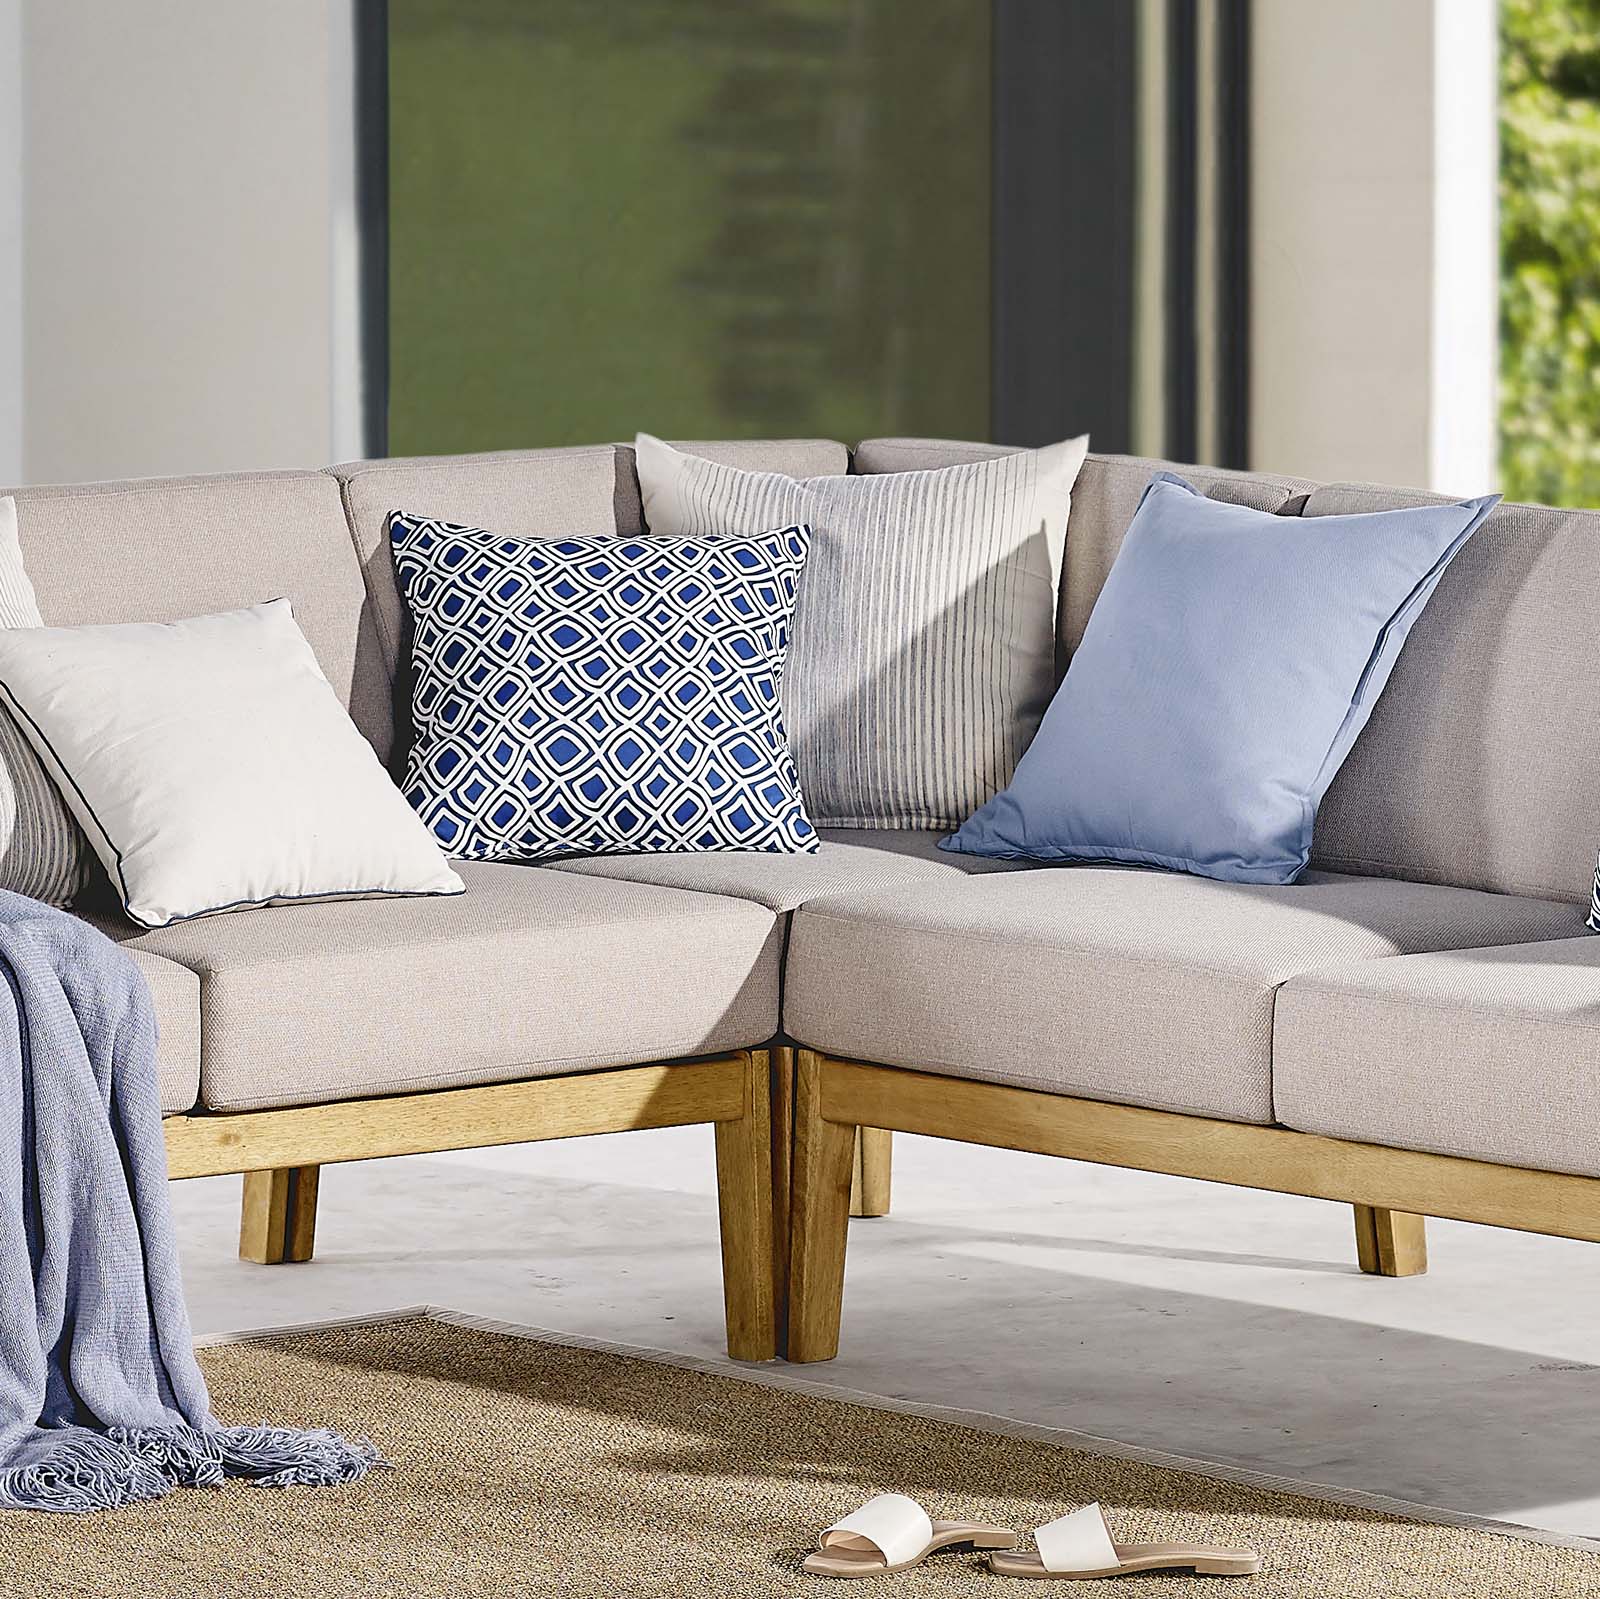 Sedona Outdoor Patio Eucalyptus Wood Sectional Sofa Corner Chair - East Shore Modern Home Furnishings